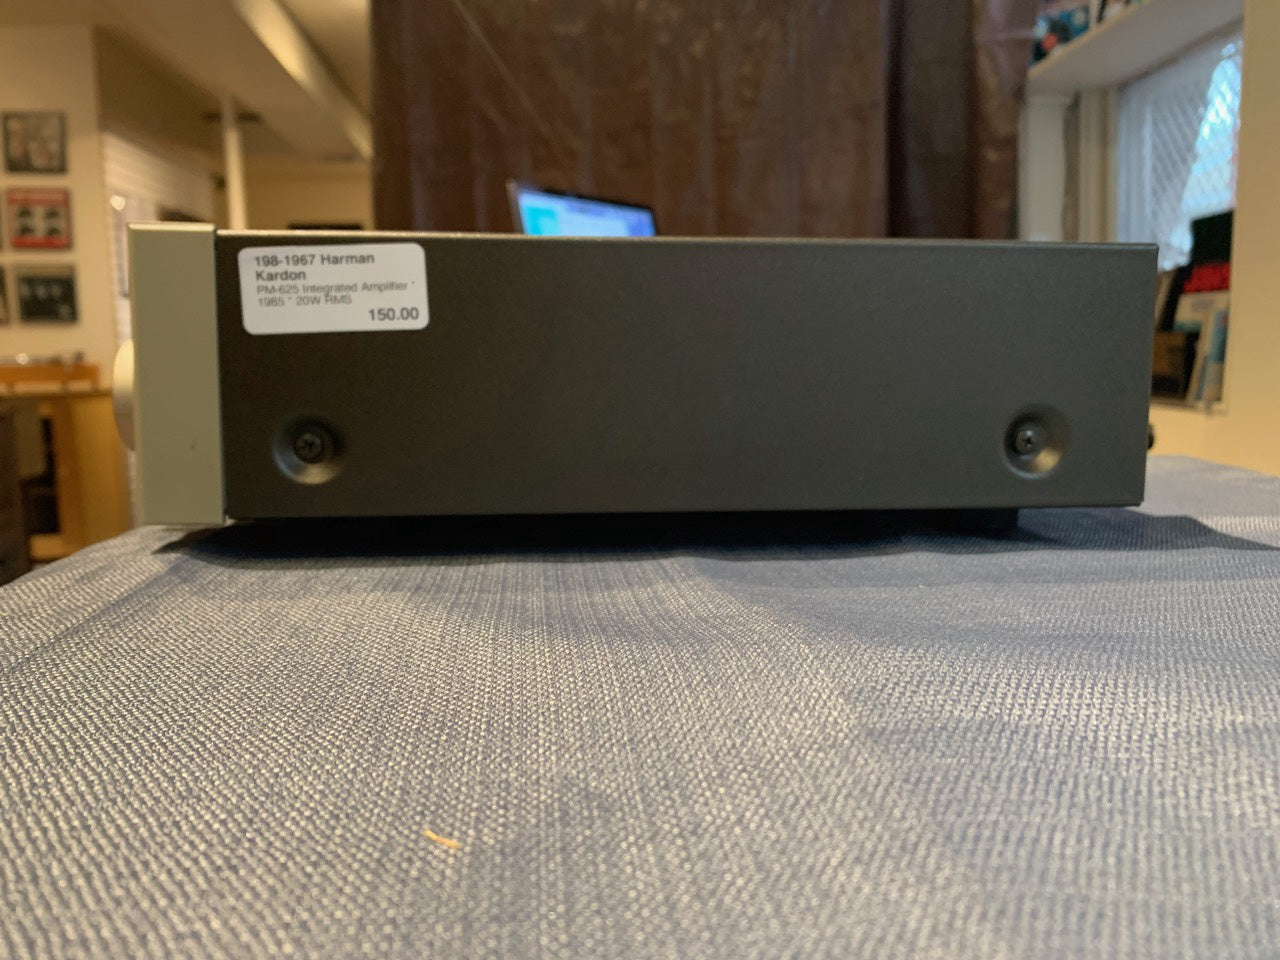 Harman Kardon PM-625 Integrated Amplifier * 20W RMS * 1985